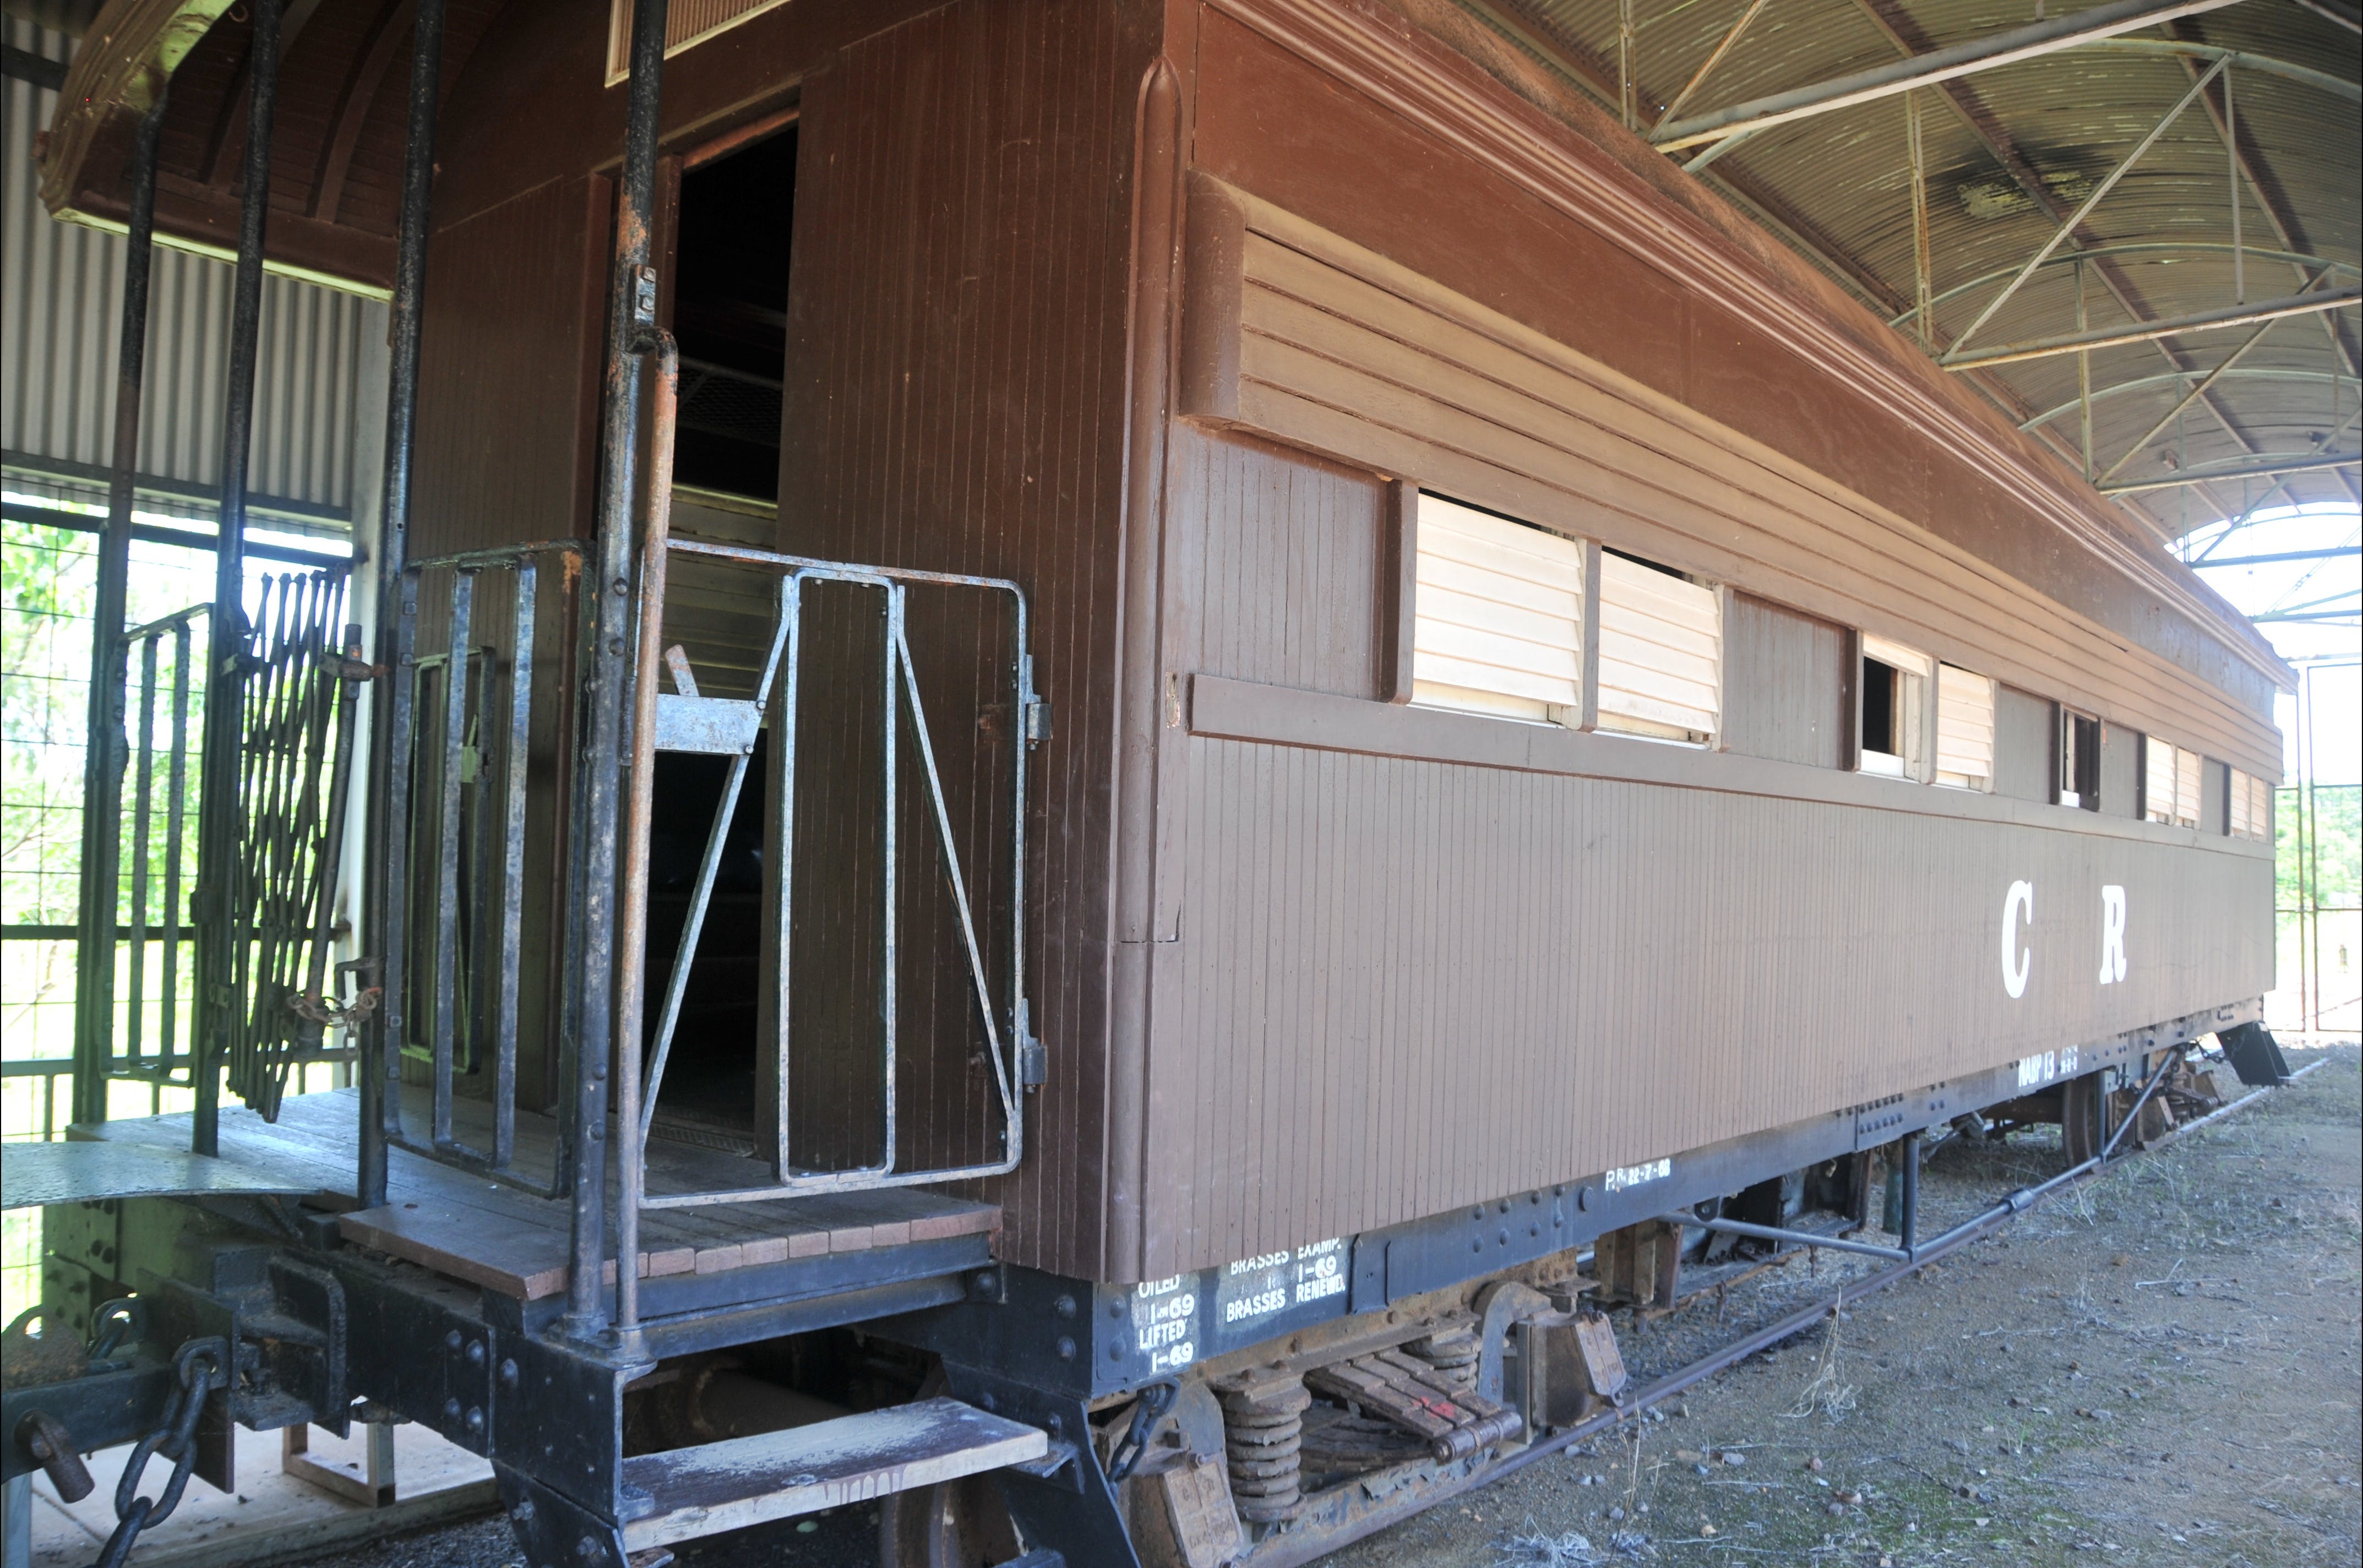 NABP 13 Passenger Carriage (Pine Creek Railway Precinct)